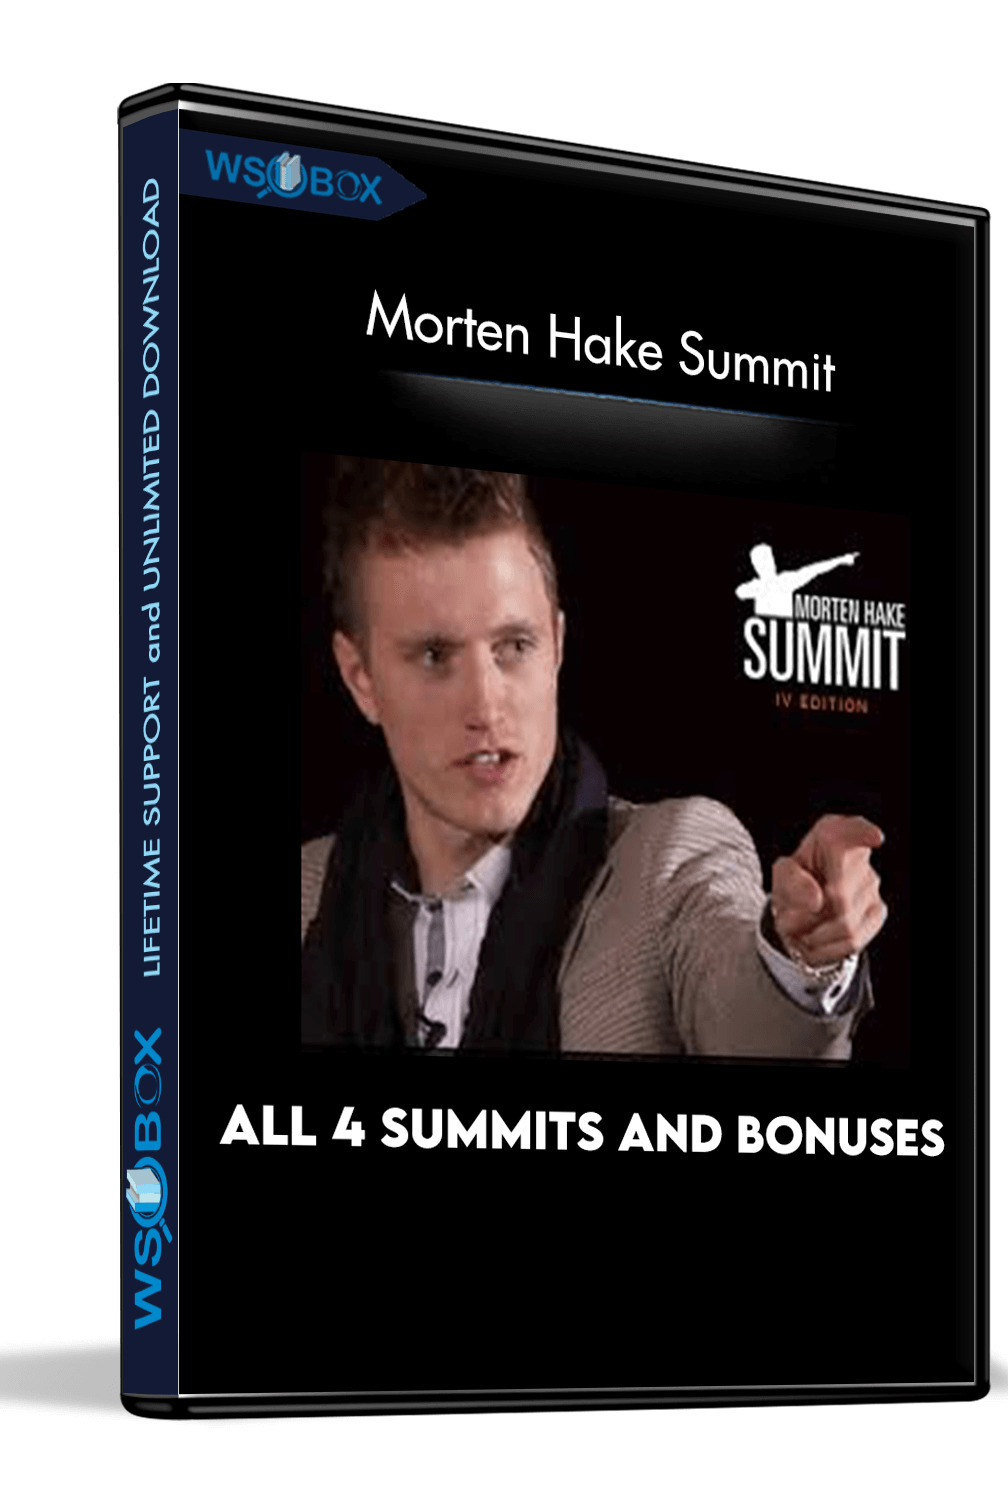 all-4-summits-and-bonuses-morten-hake-summit